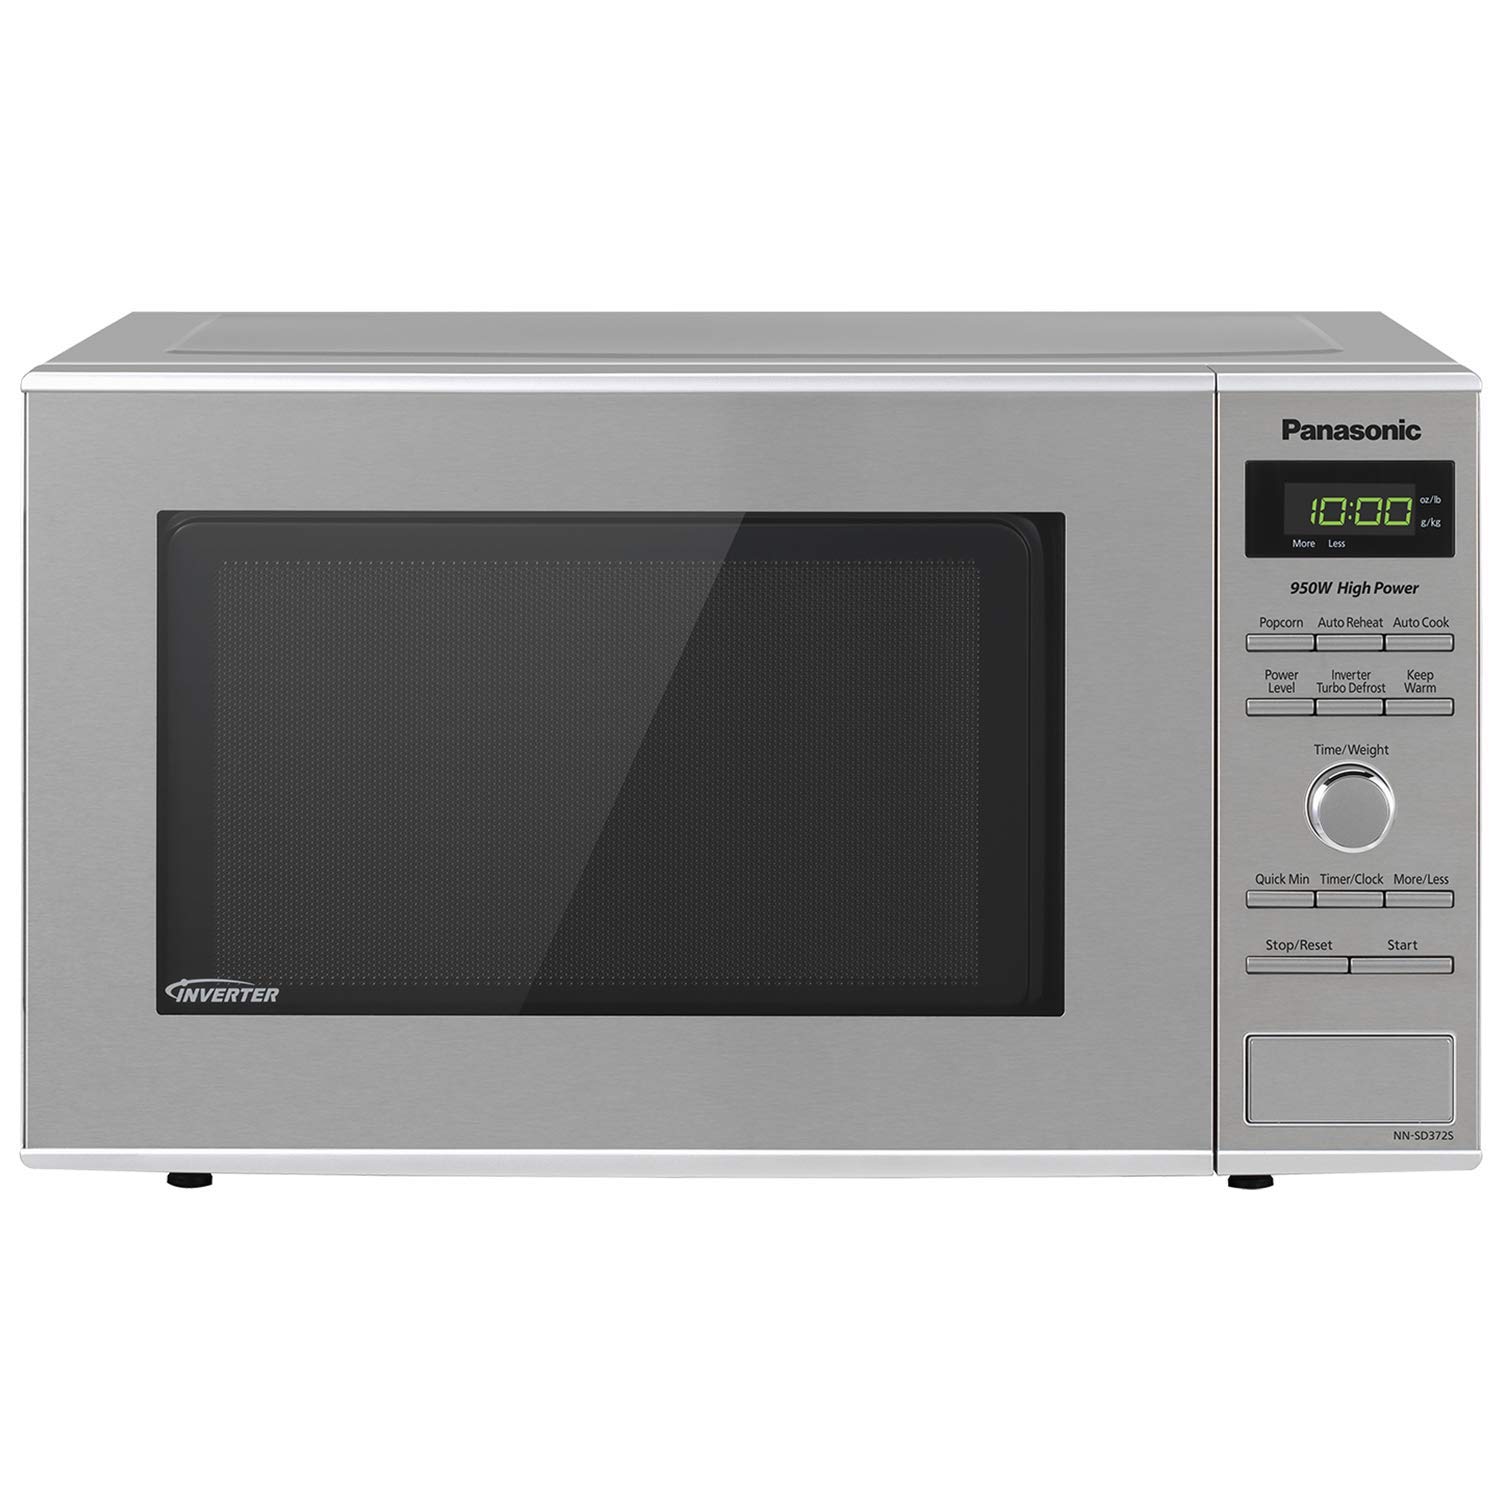 Panasonic NN-SD372S 0.8 Cu. Ft. 950W Countertop Microwave Oven (Inverter Technology)